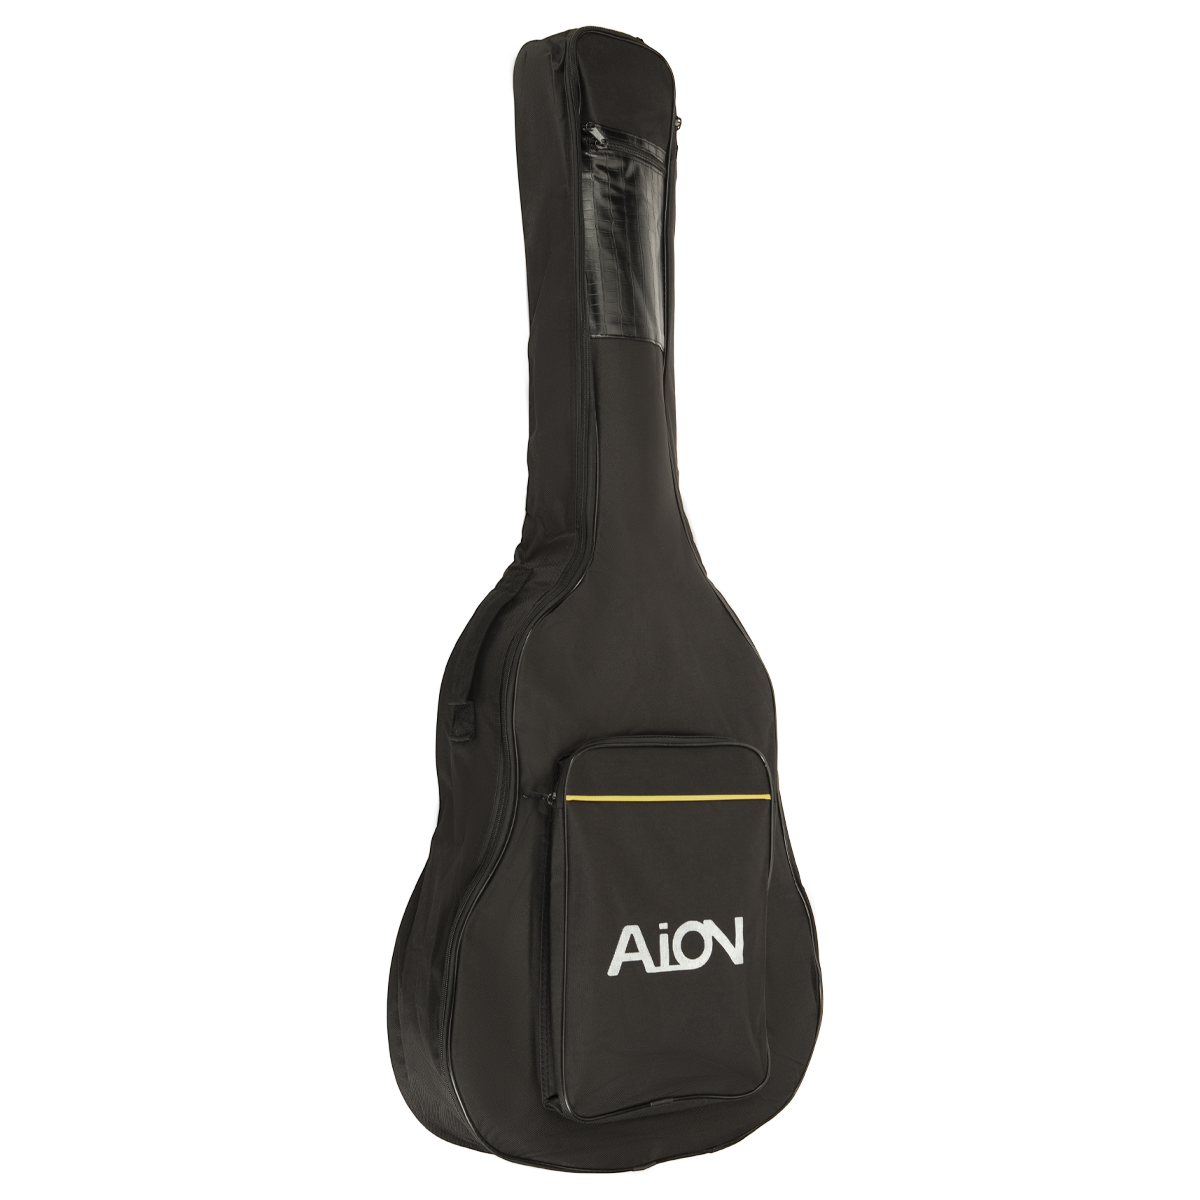 Aion Qb-mb-5mm-41 black